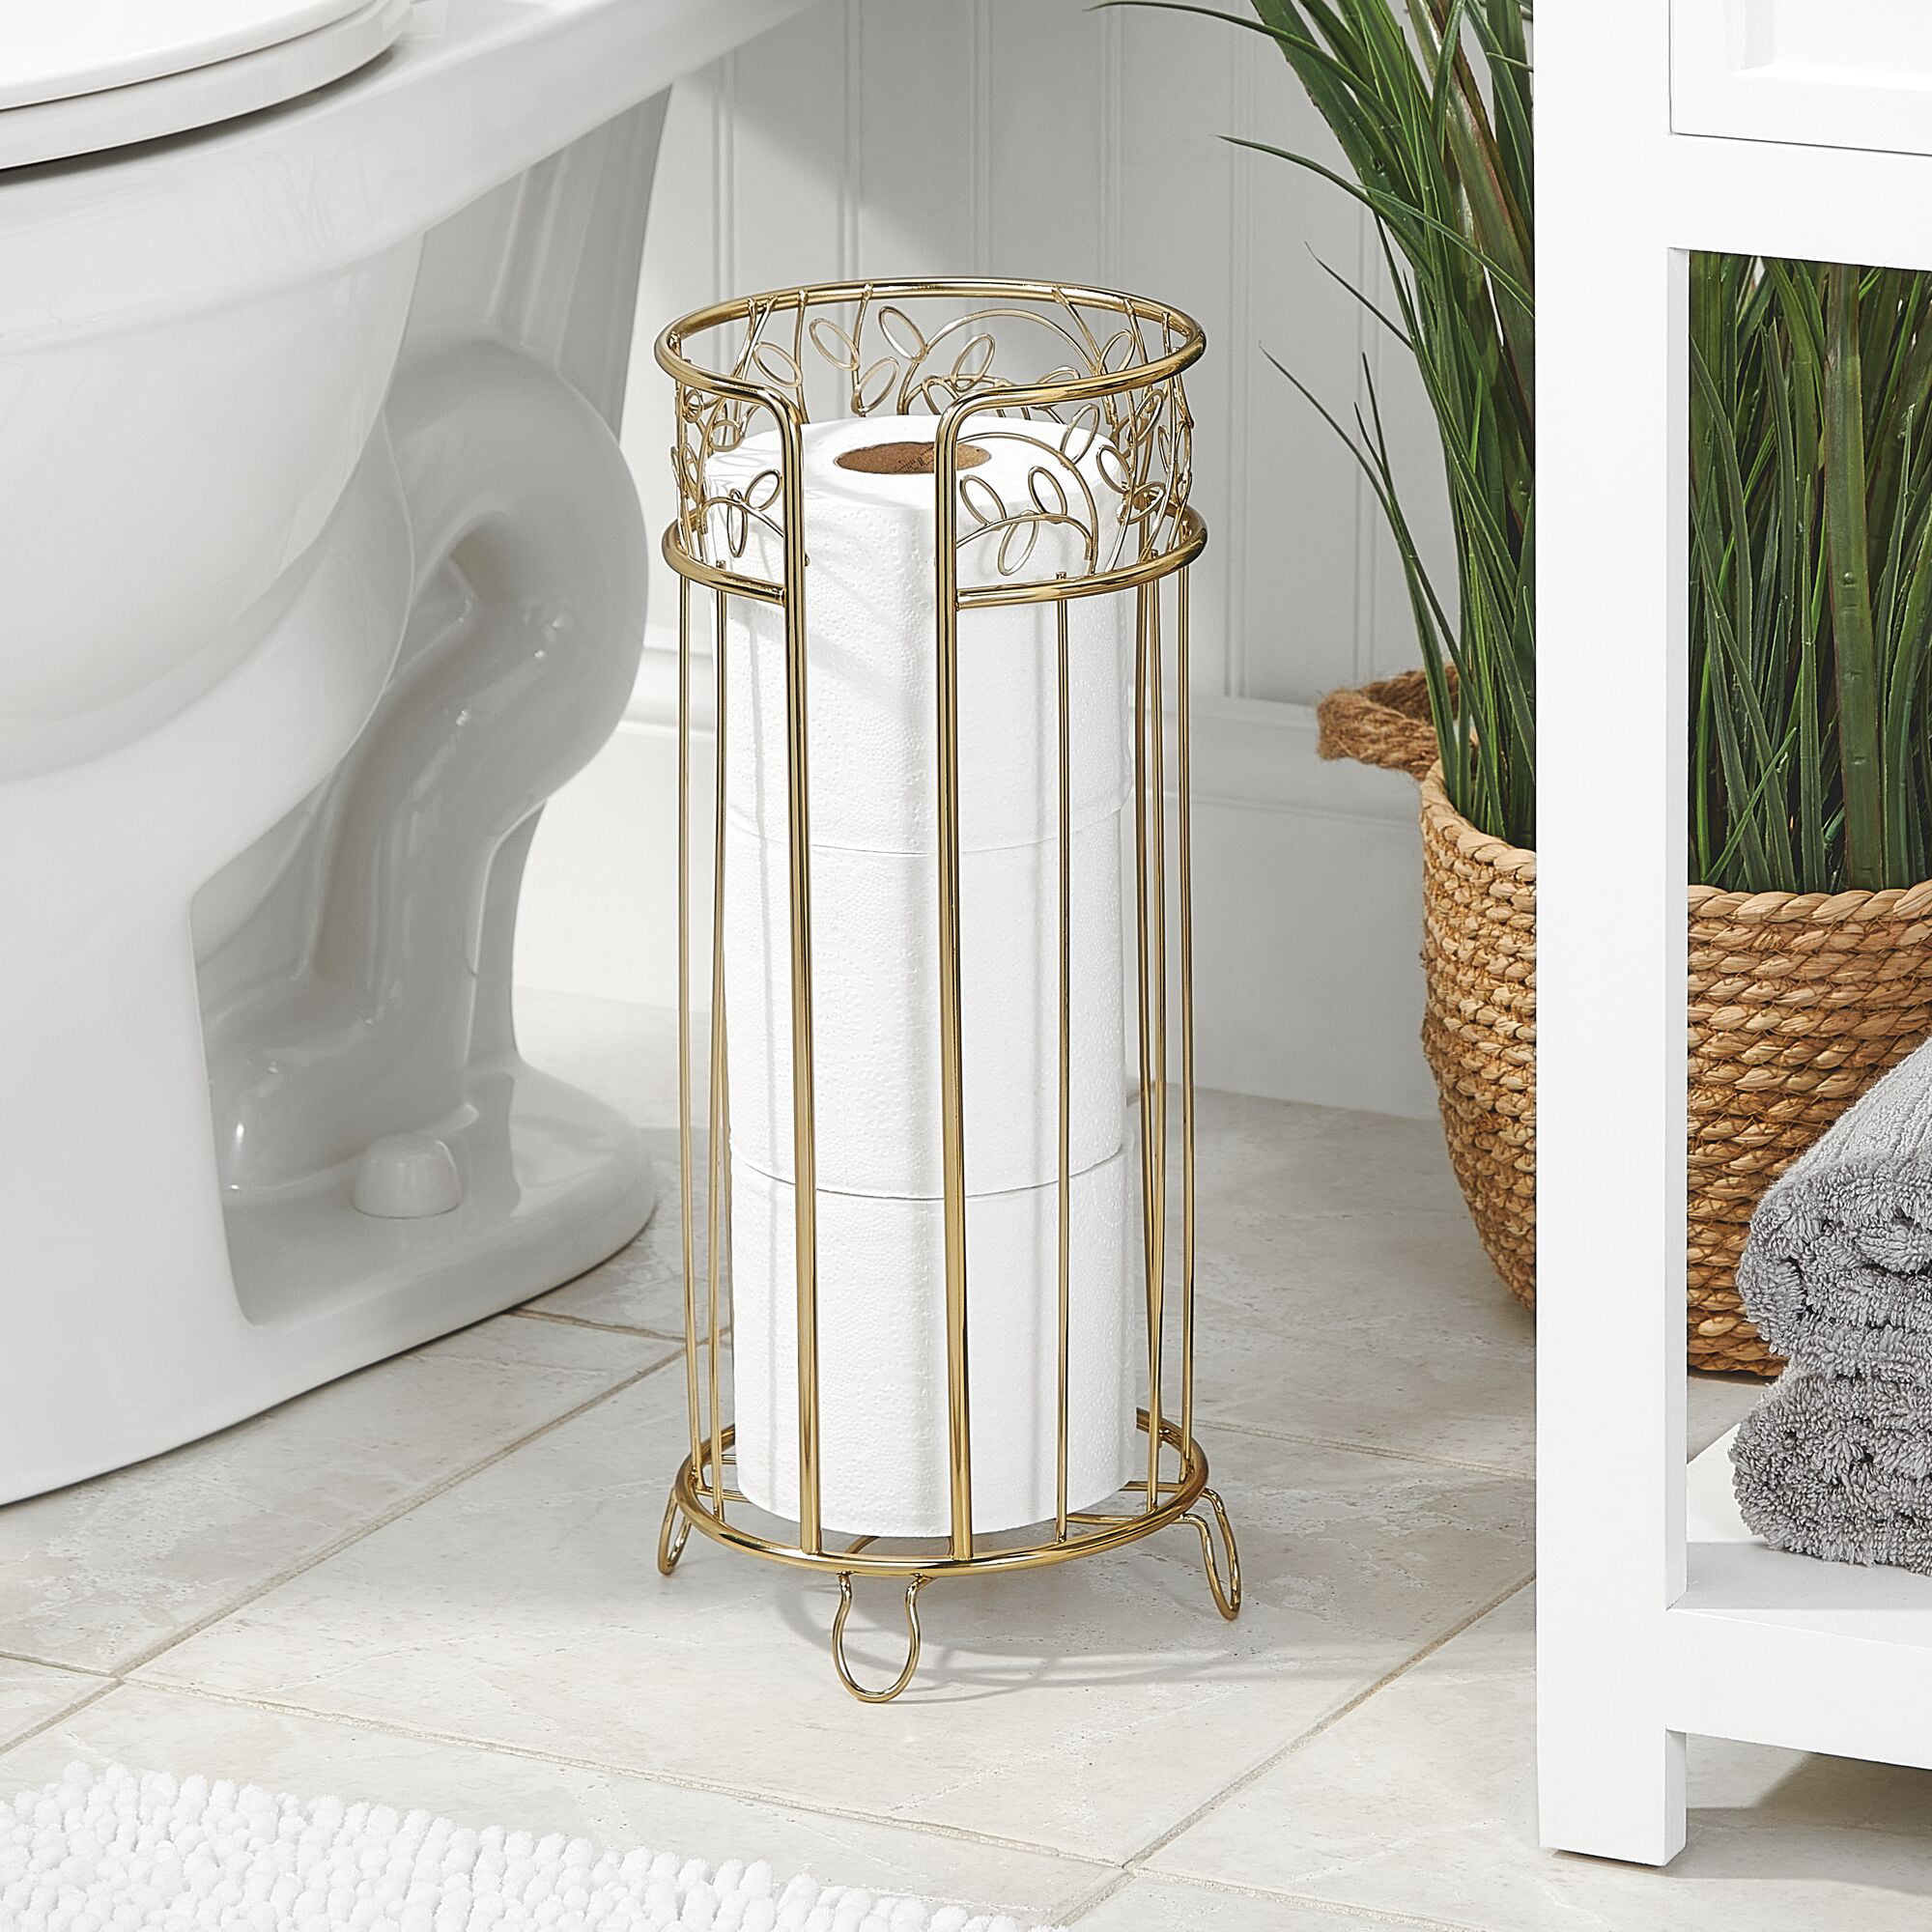 mDesign Decorative Metal Toilet Paper Storage Holder Stand, 3 Rolls - Chrome